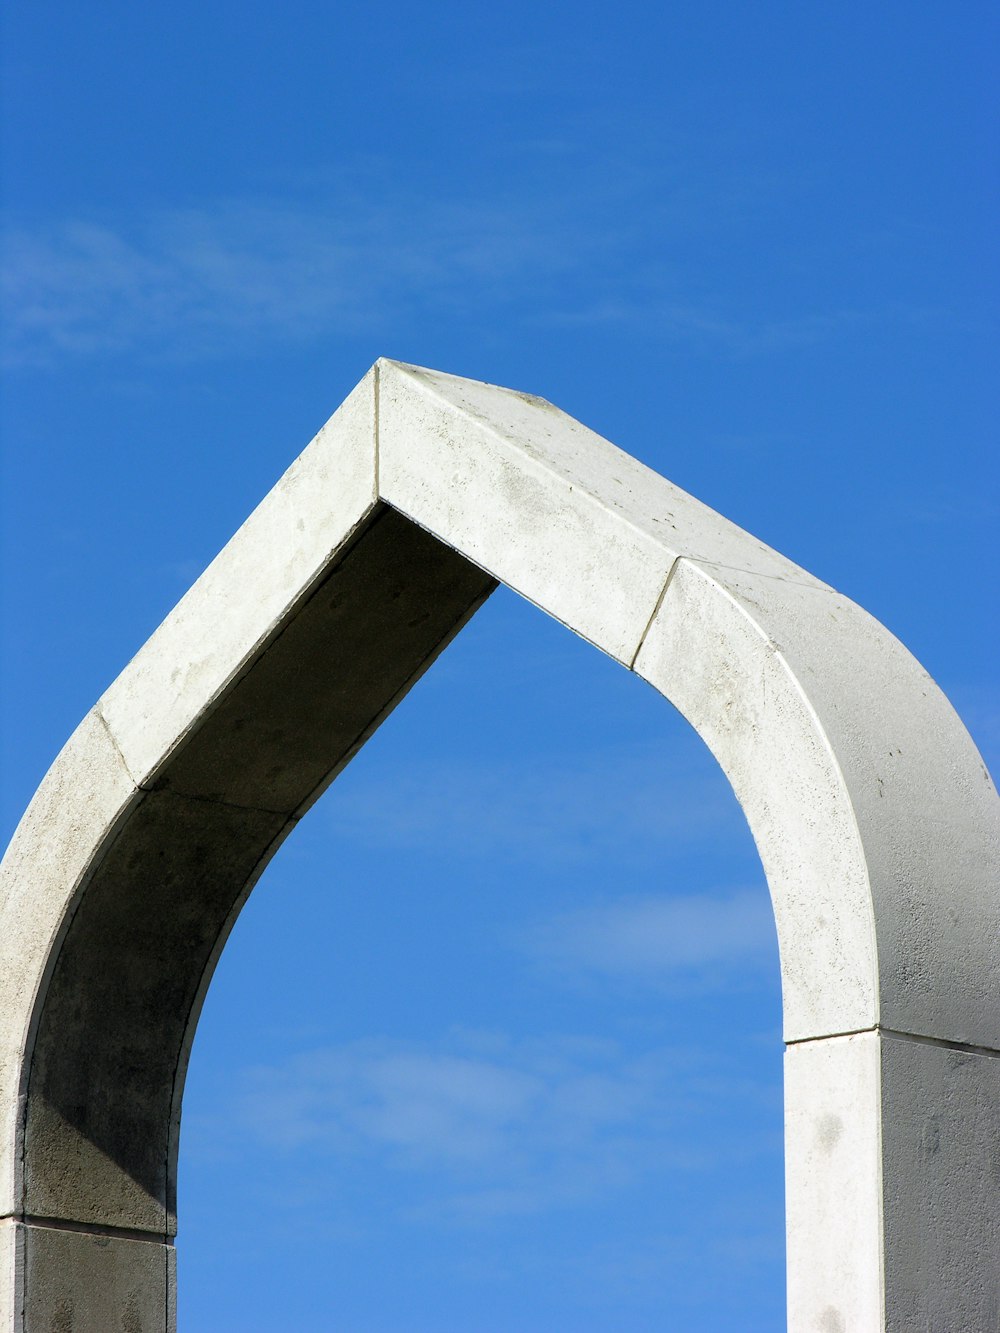 grey concrete arch under blue sky during daytime